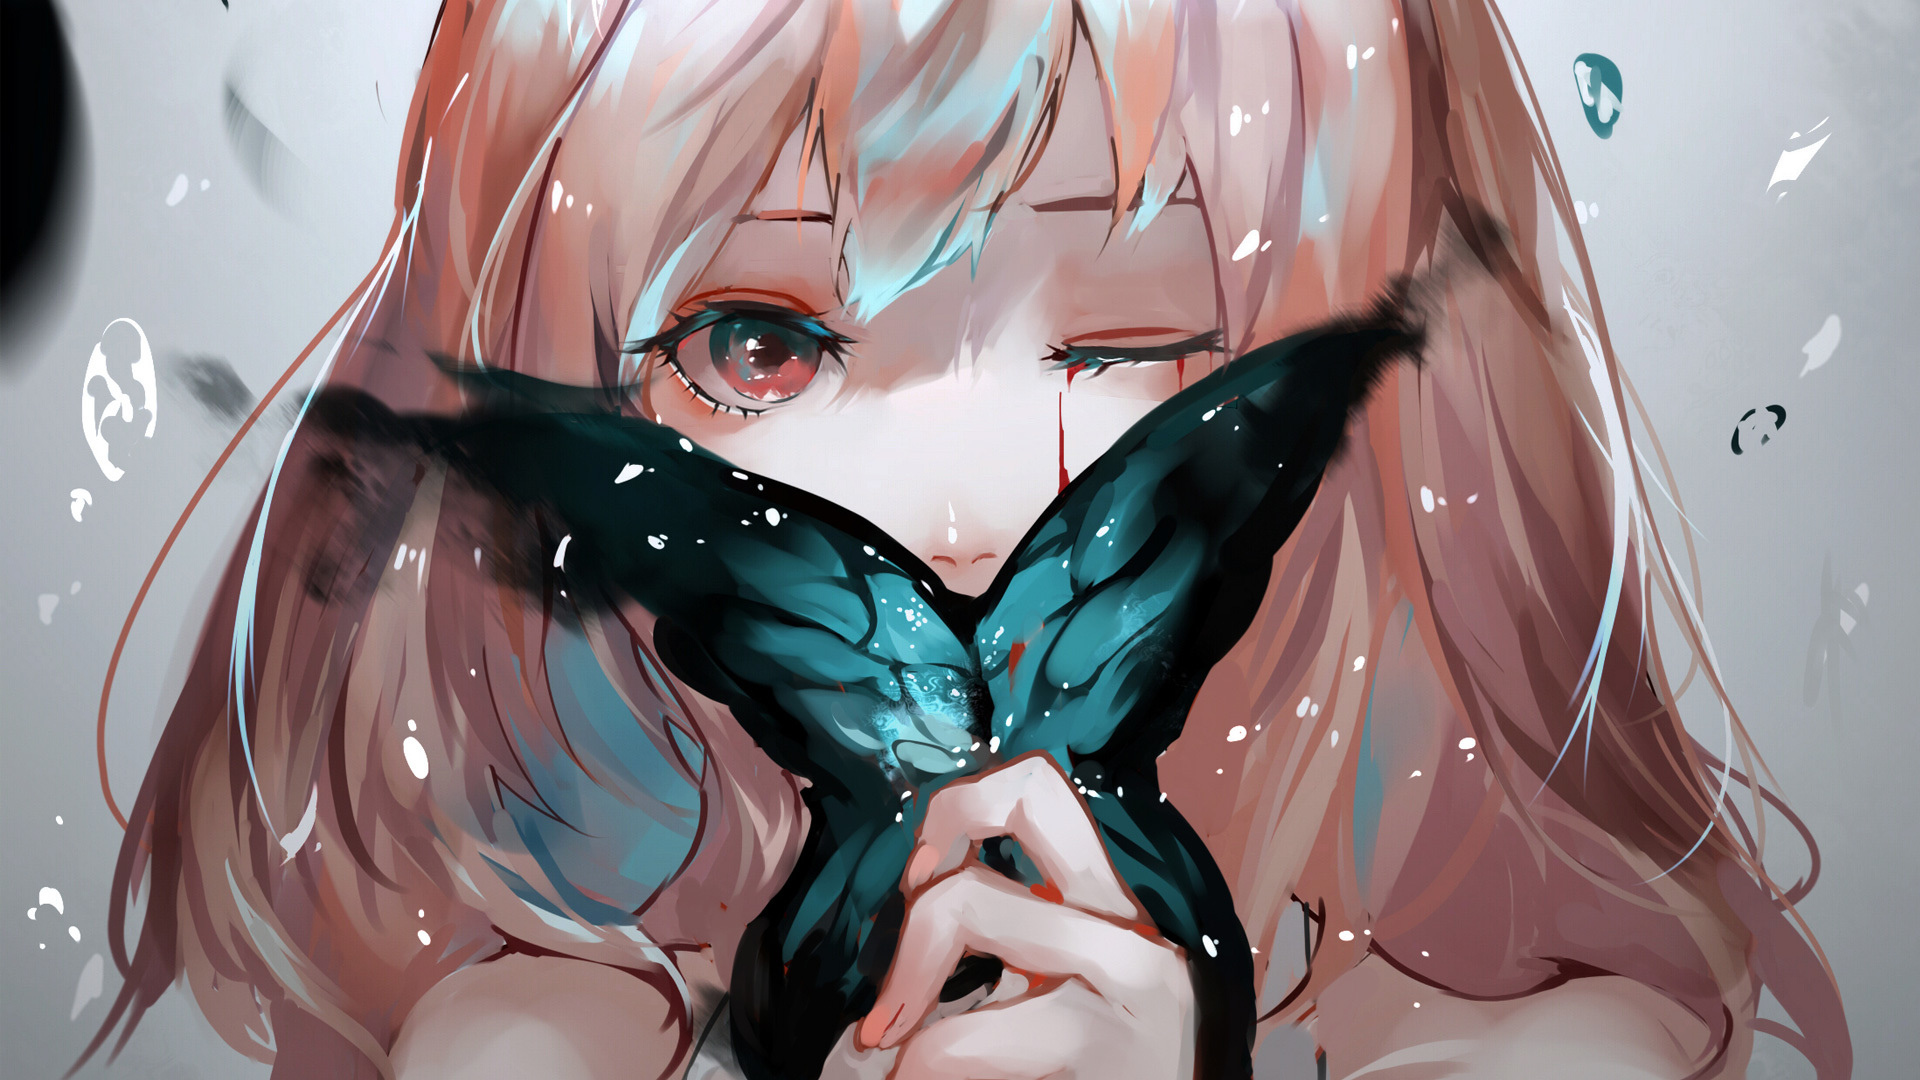 Wallpaper Anime girl and butterfly, art